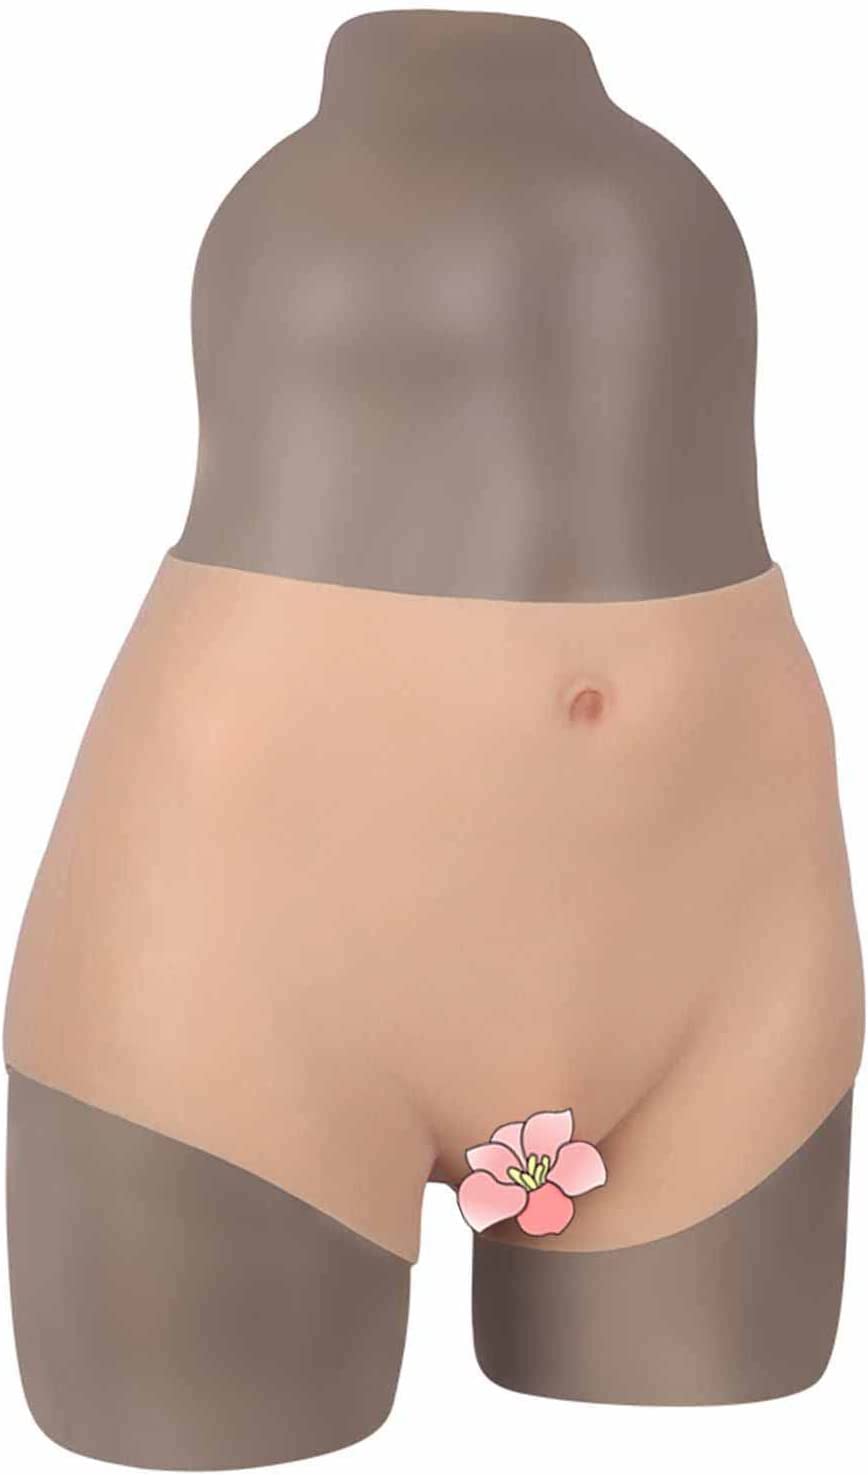 Simulated Silicone Vagina Underwear Panties for Crossdresser Drag Queen  Cosplay